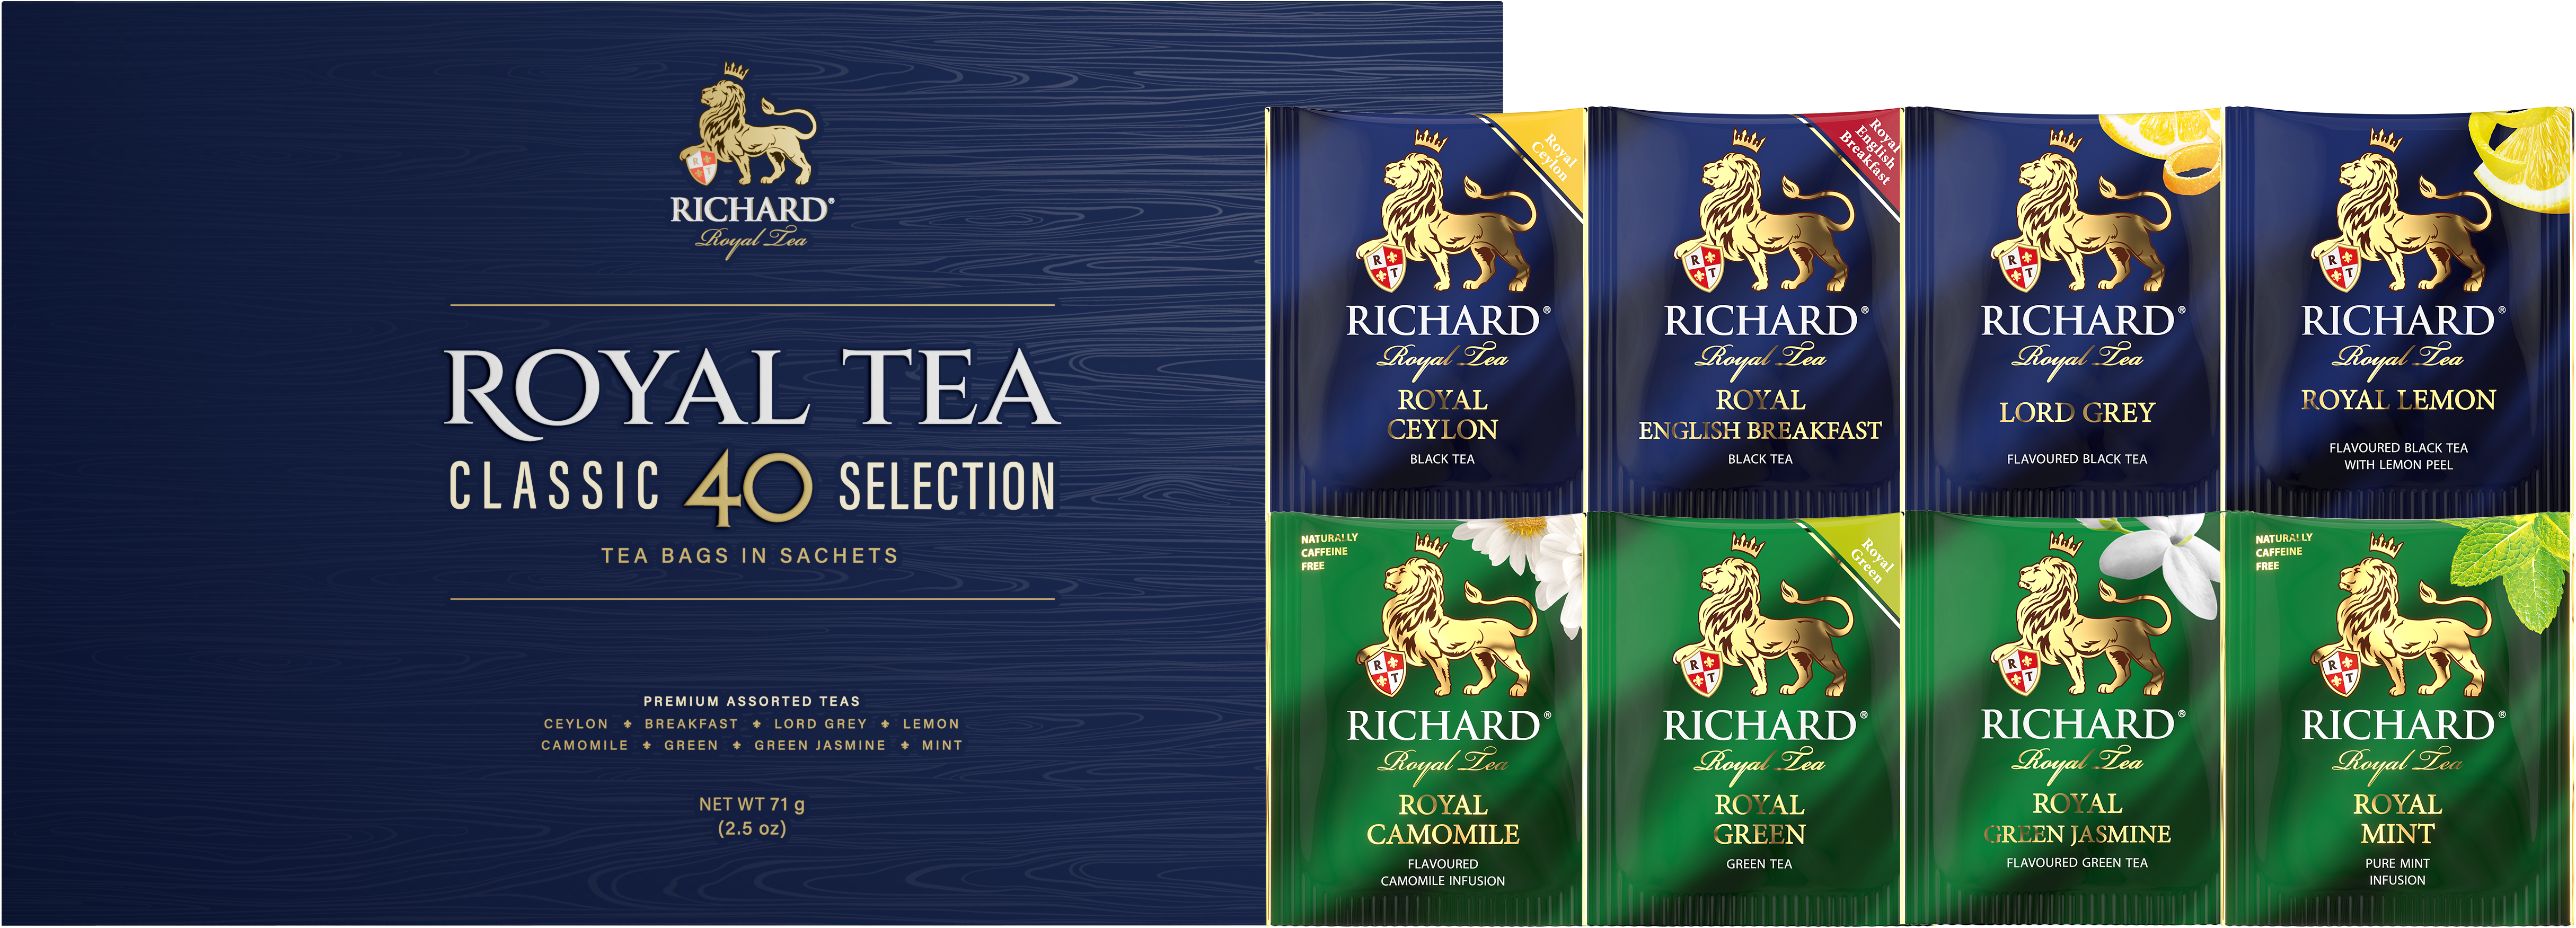 Richard "CLASSIC SELECTION" tea assortment 40 sachets